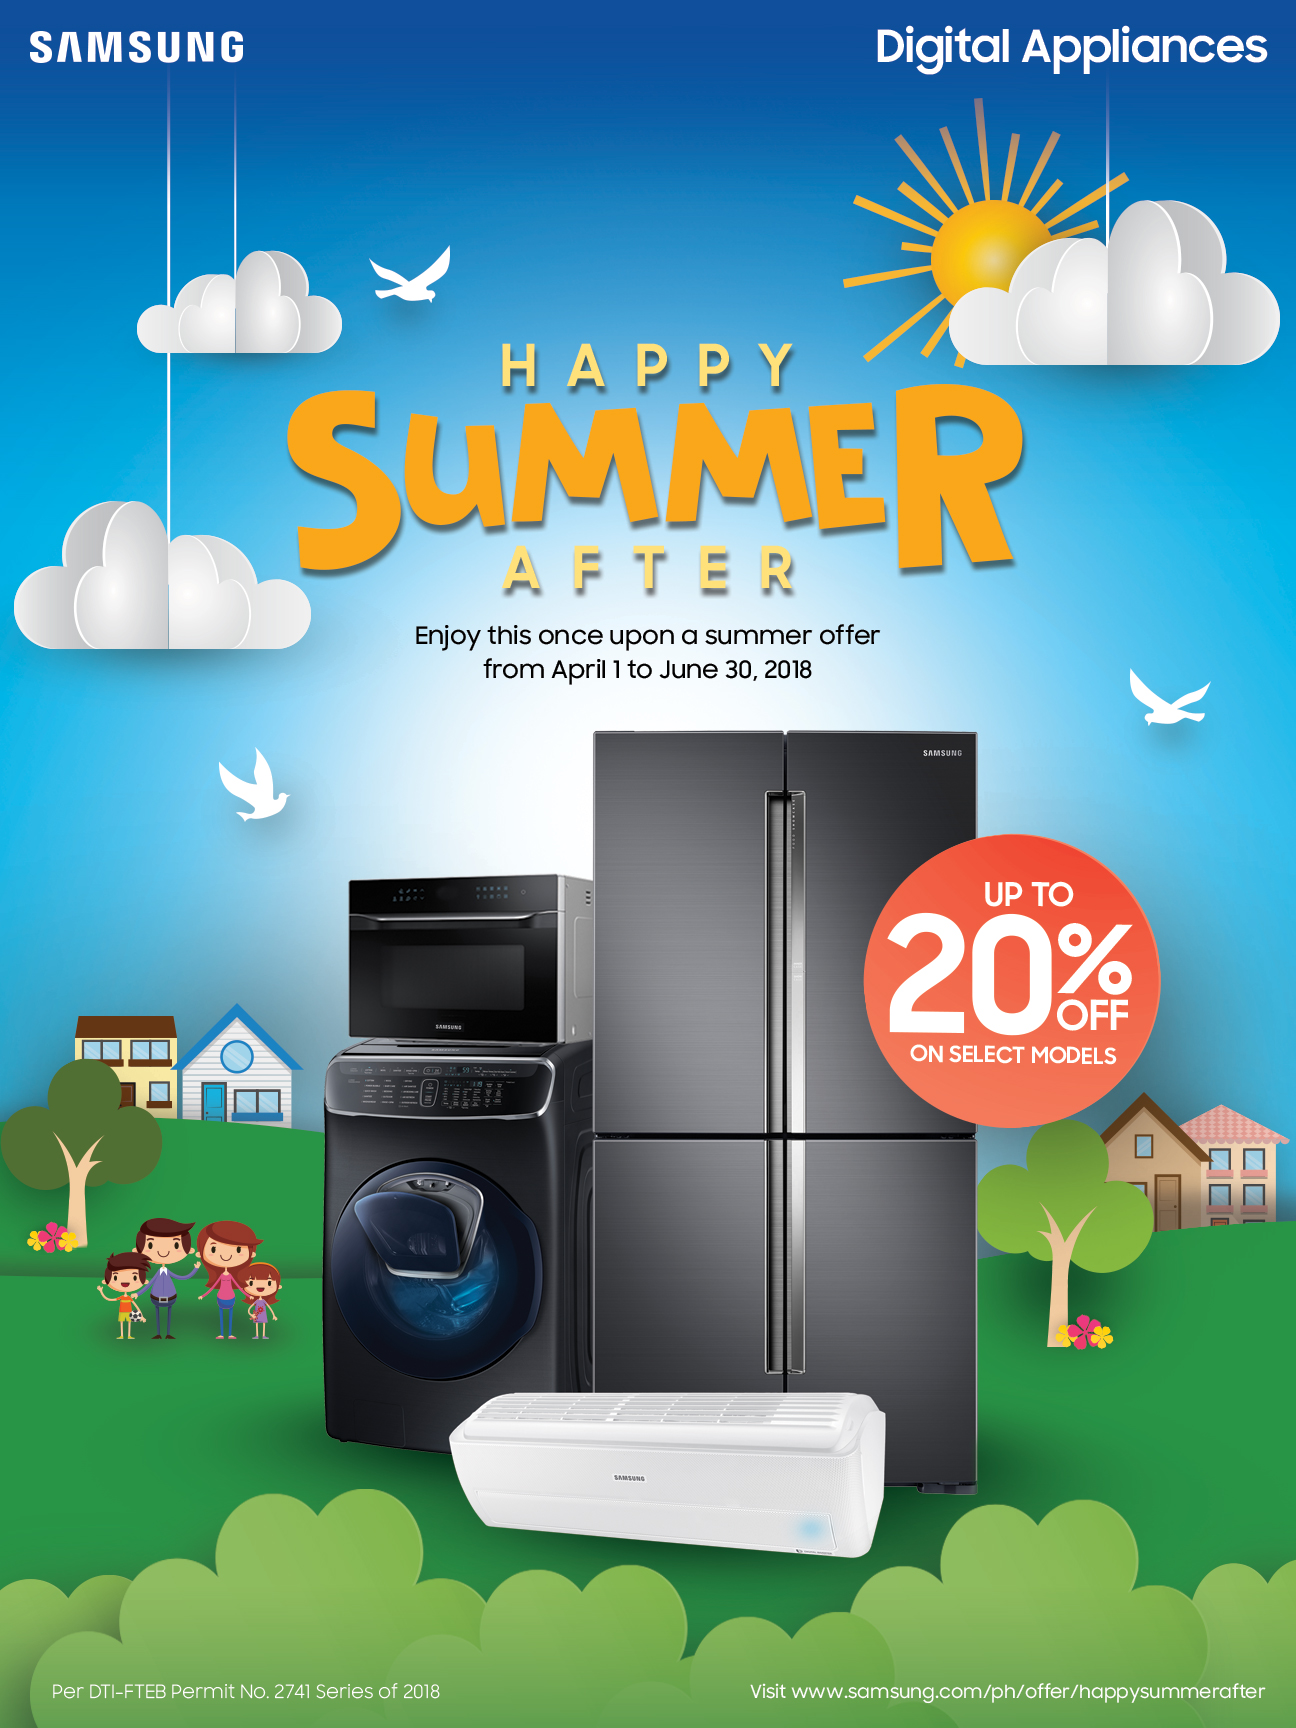 SAMSUNG Digital Appliances’ Happy Summer After Deals available until June 30 only!